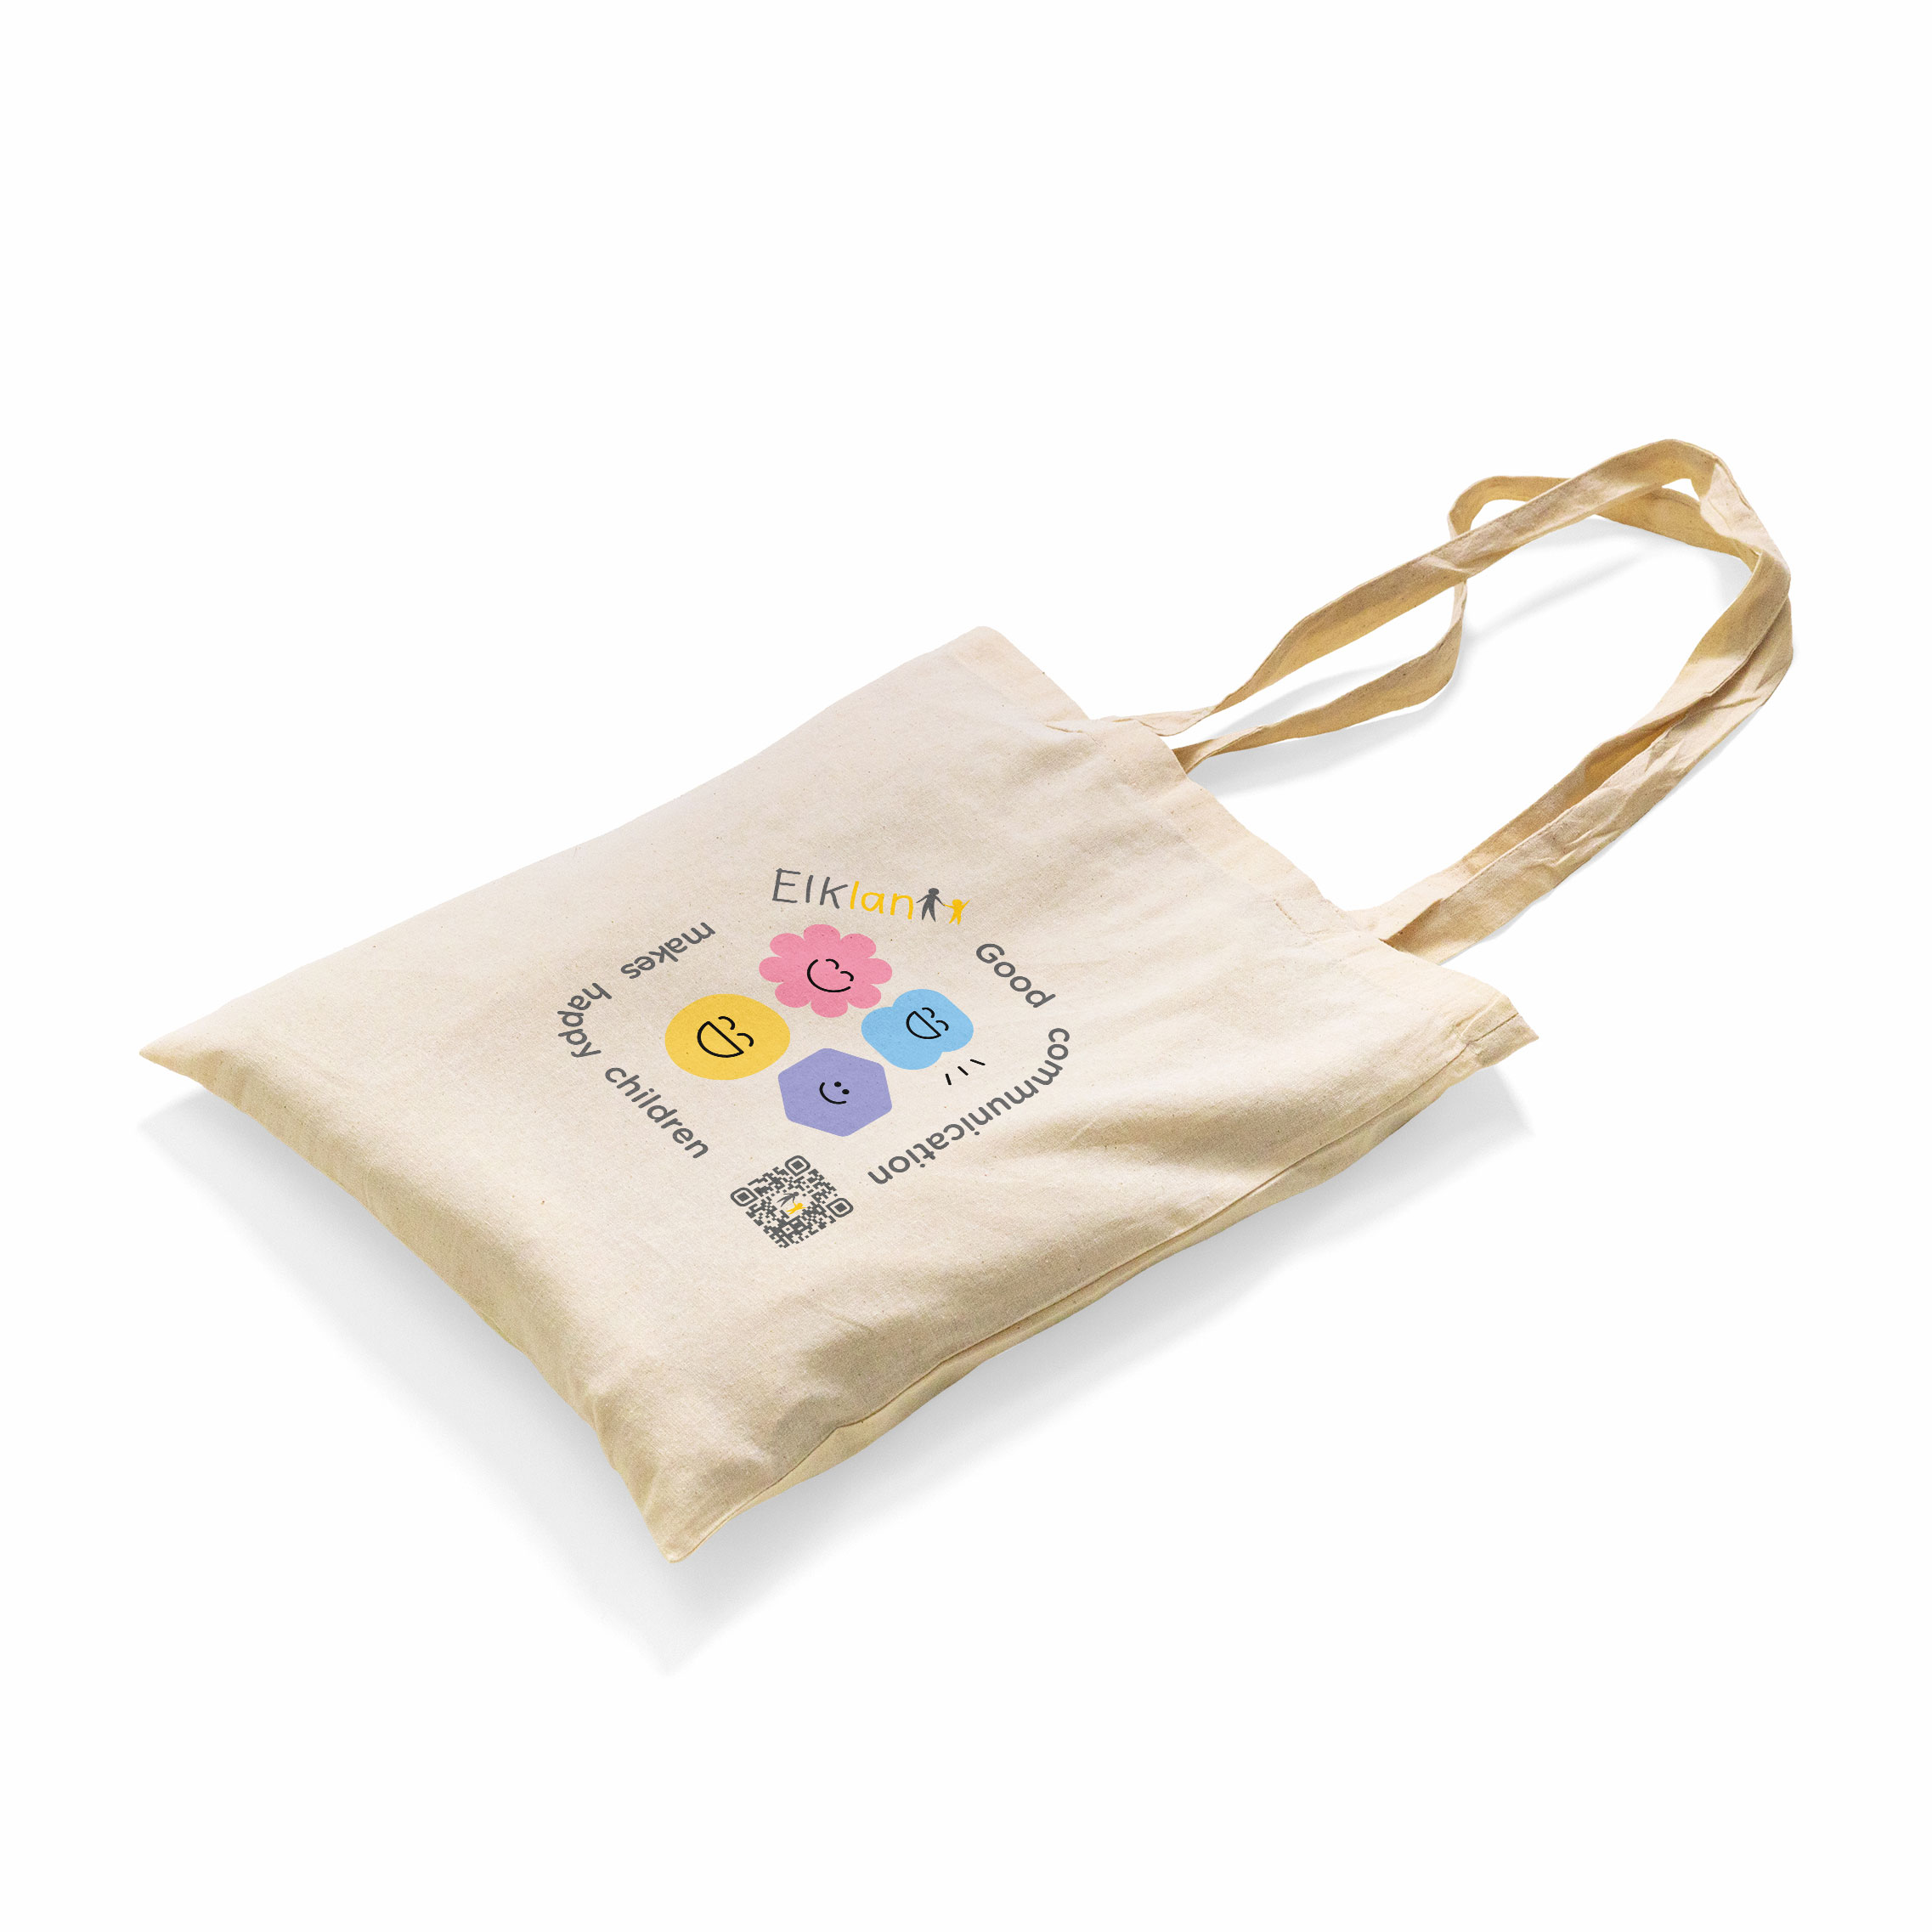 Elklan-branded tote bag sample image